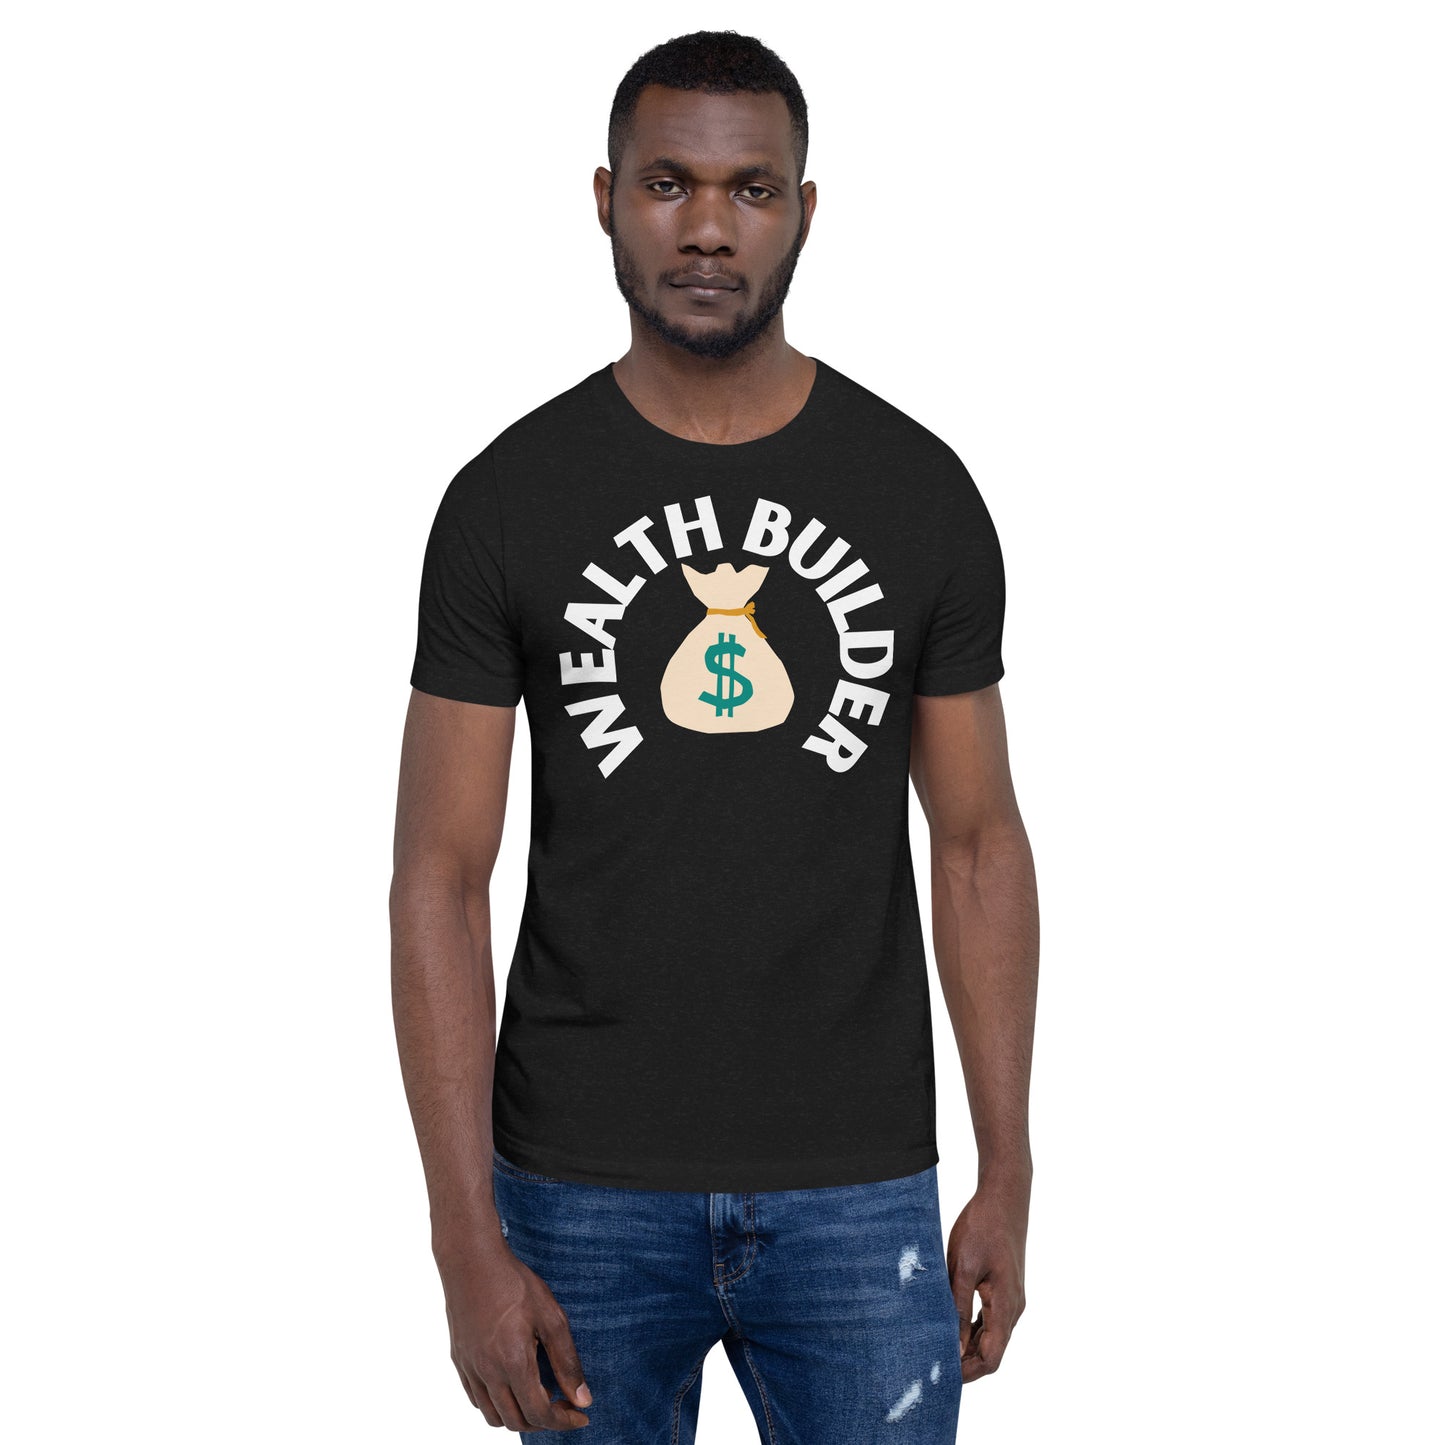 Wealth Builder Money Bag Unisex t-shirt